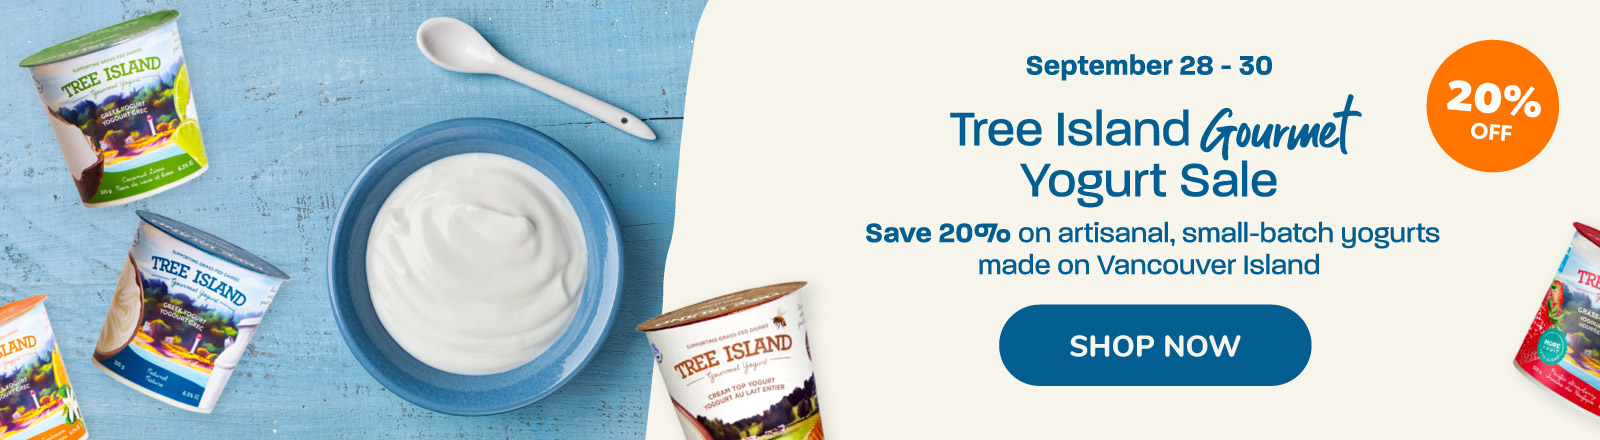 save on tree island yogurt this week